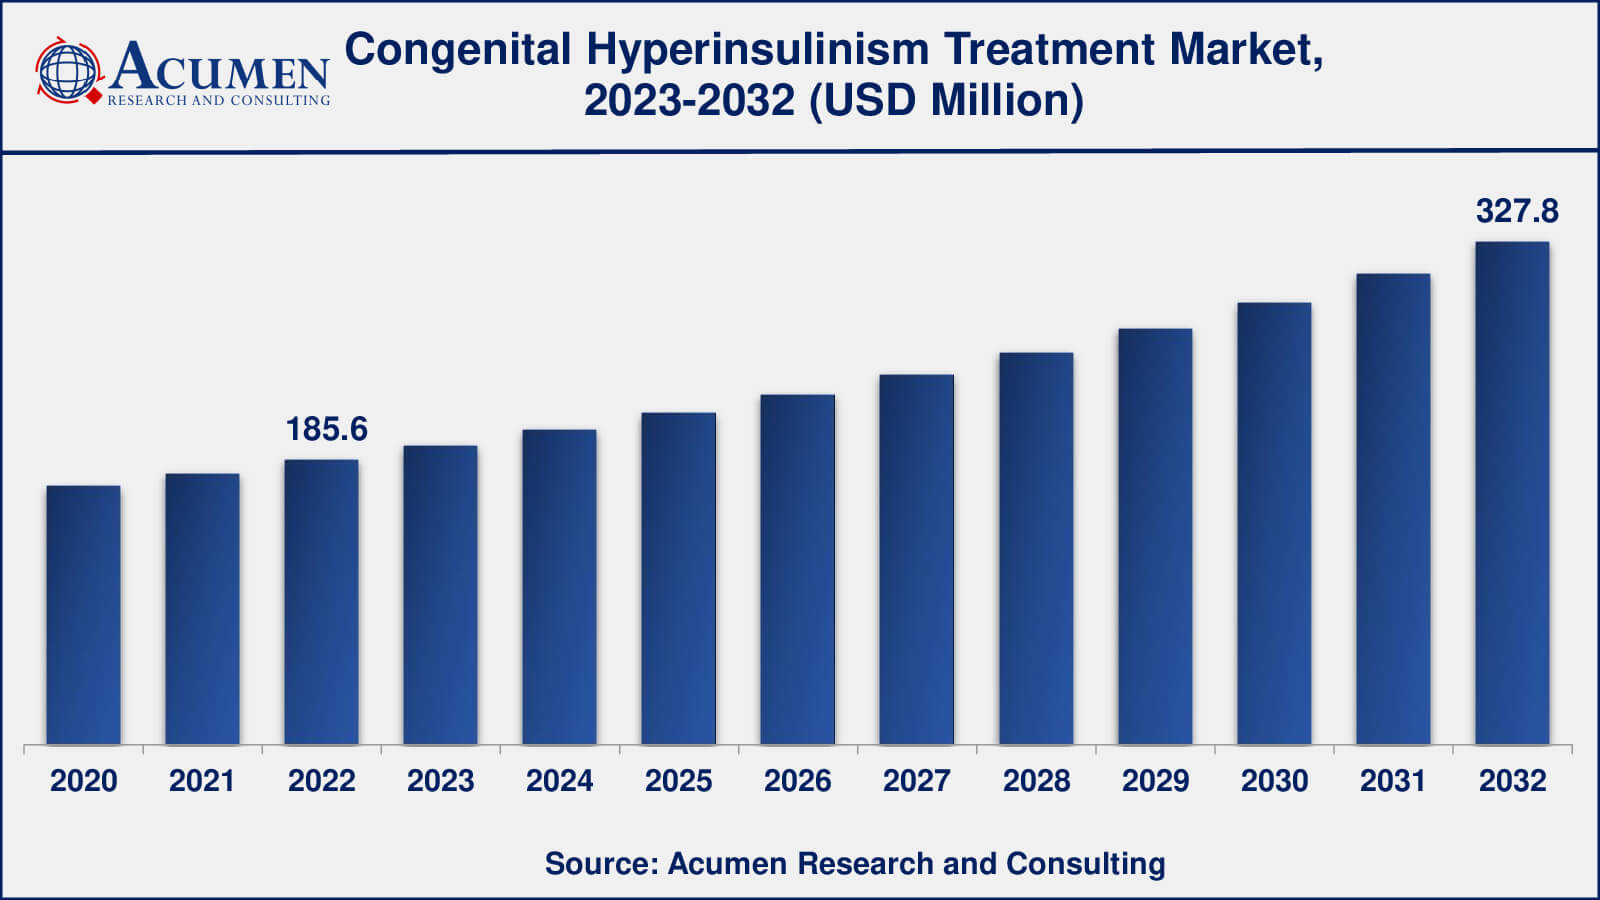 Market for Congenital Hyperinsulinism Treatment